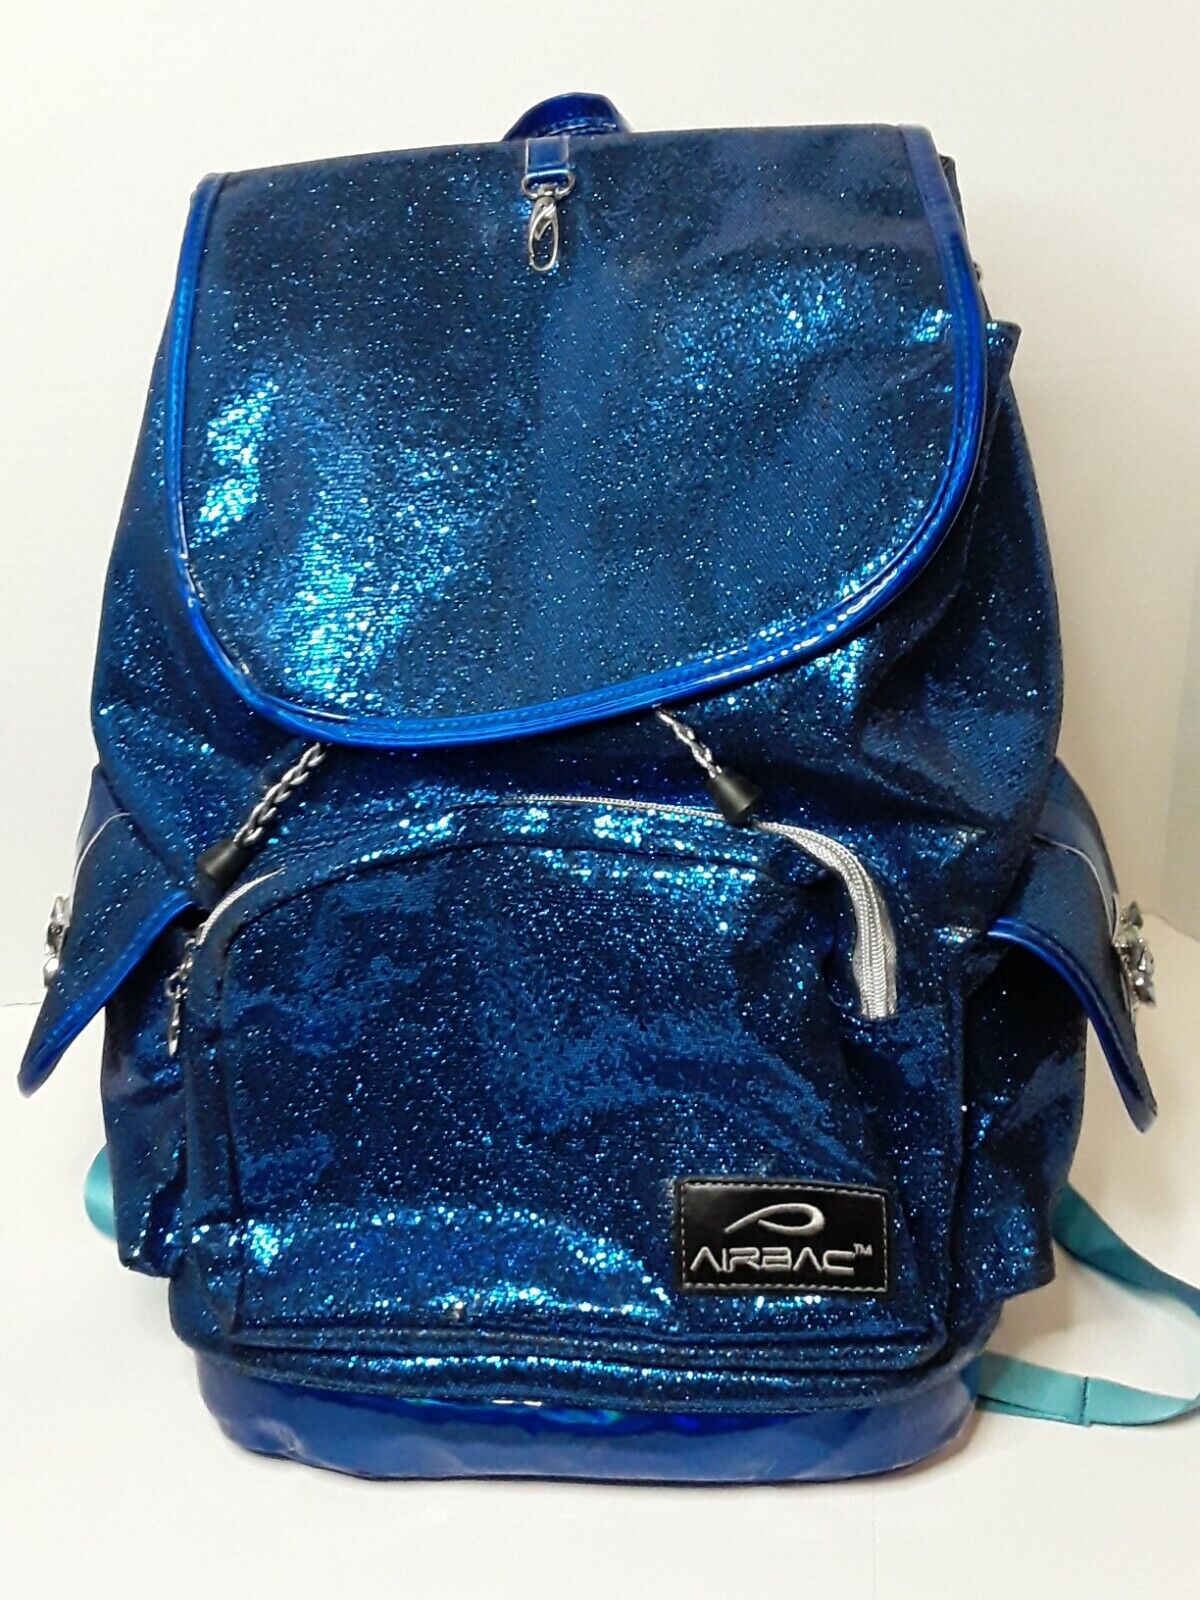 Airbac Rare Blue Sparkle Glitter Backpack Cheerleader Dancer Pump Up